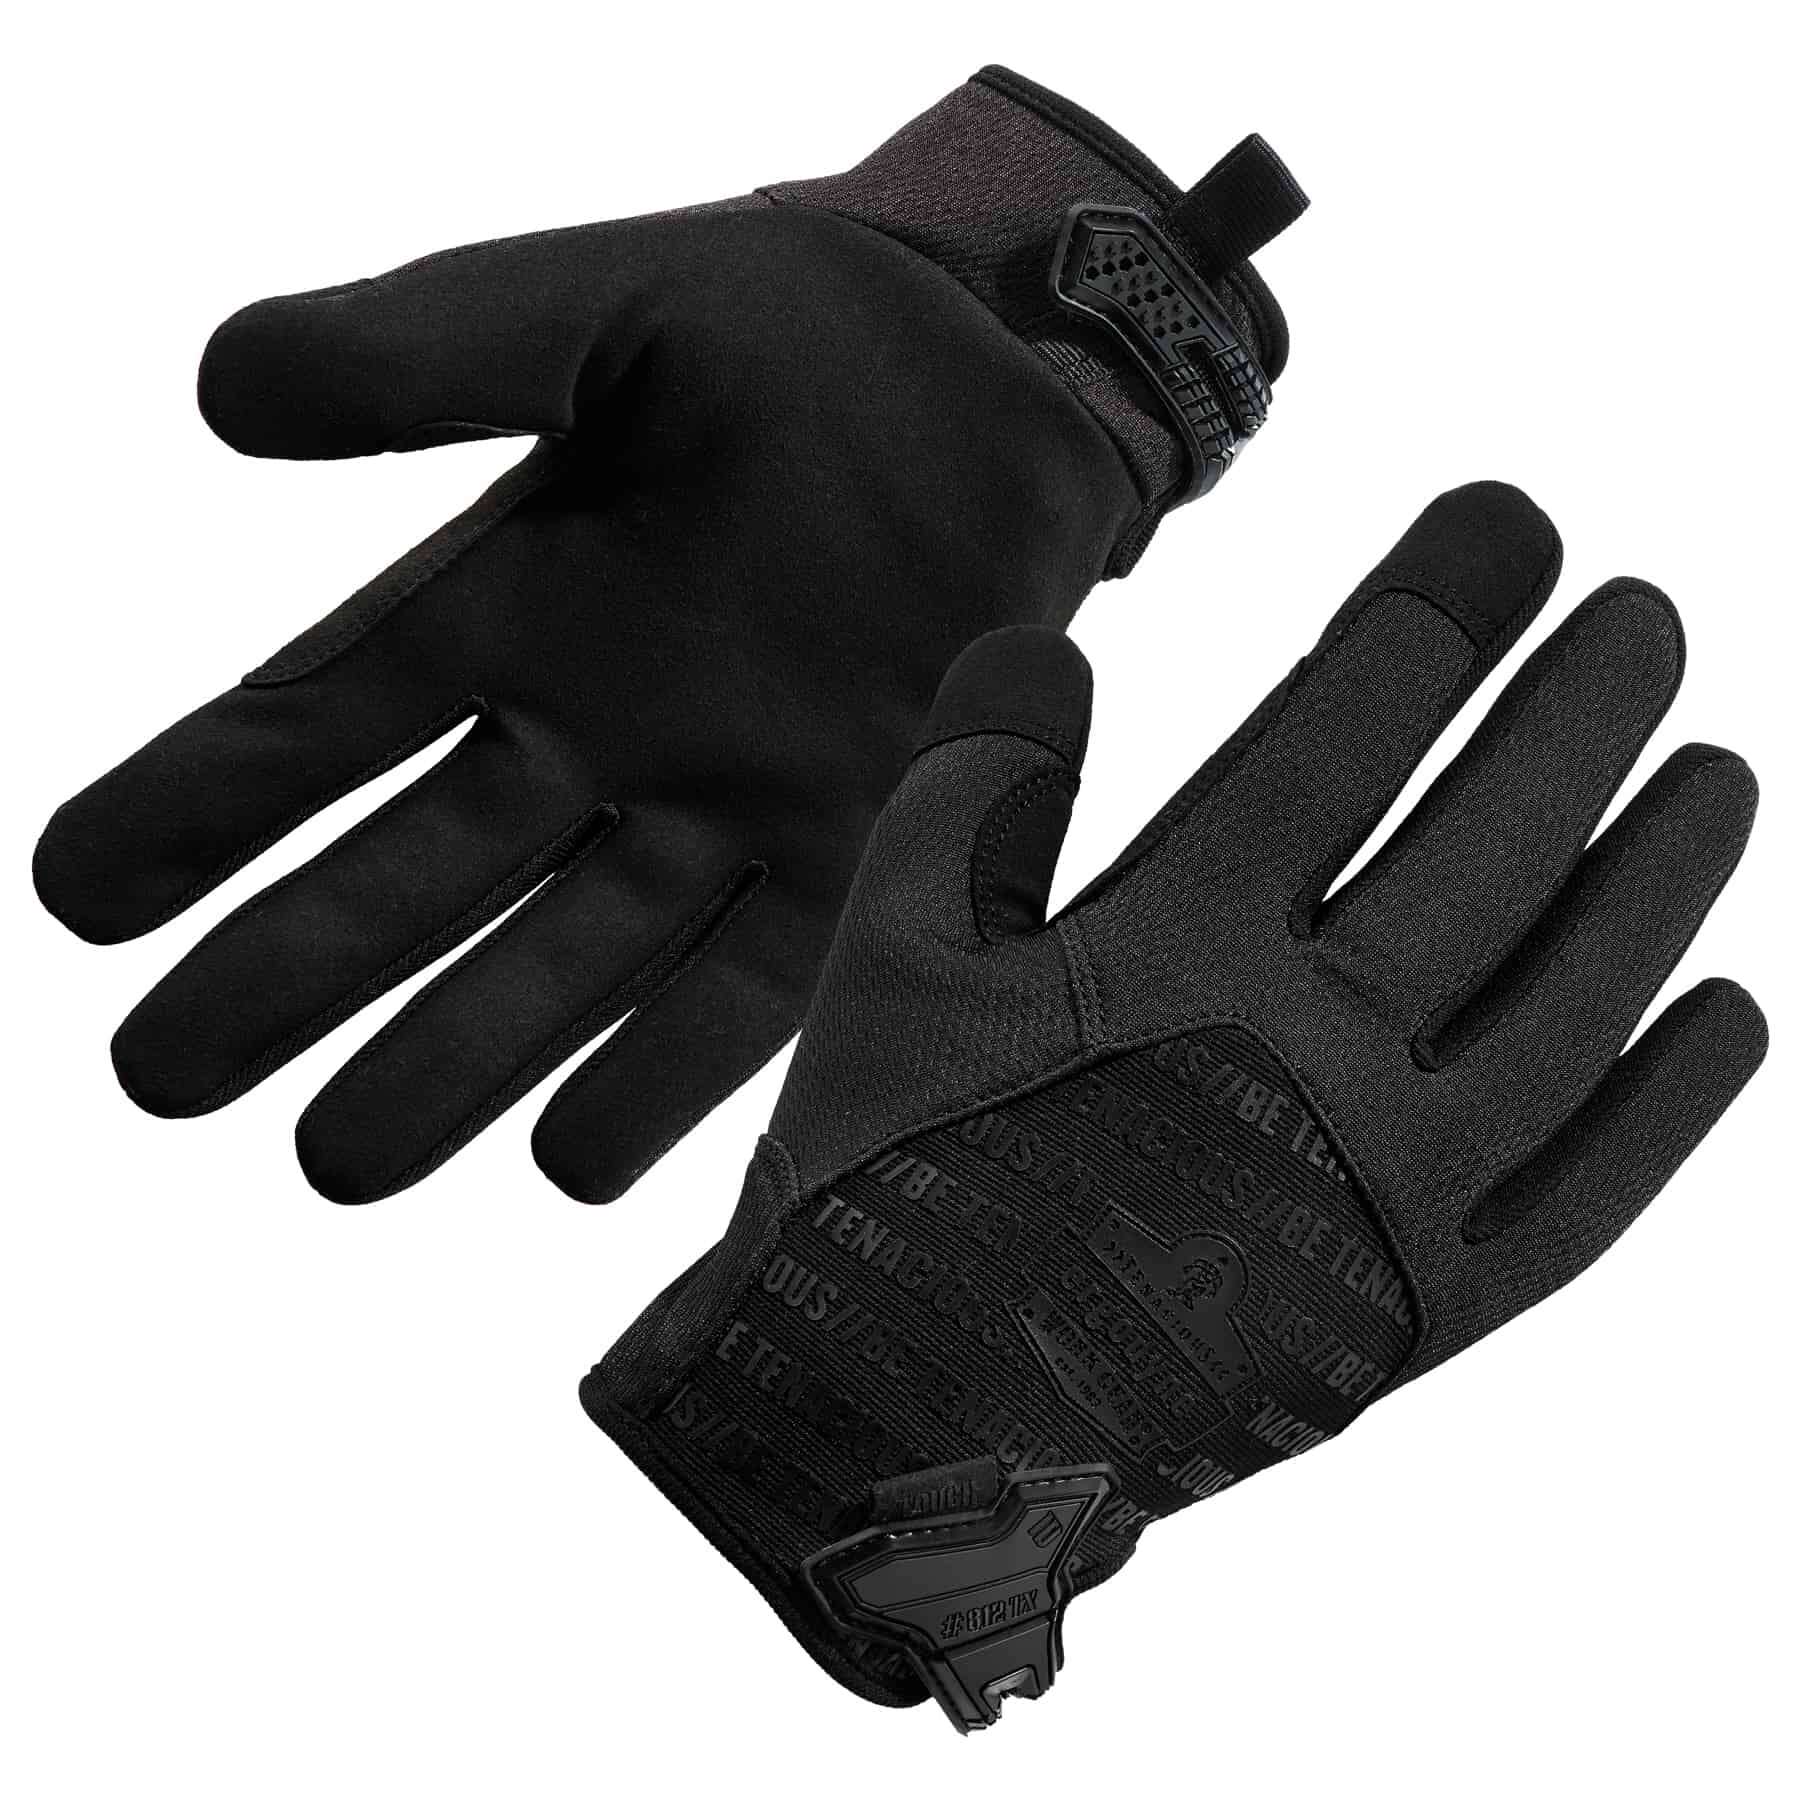 https://www.ergodyne.com/sites/default/files/product-images/17576-812blk-high-dexterity-black-tactical-gloves-pair.jpg